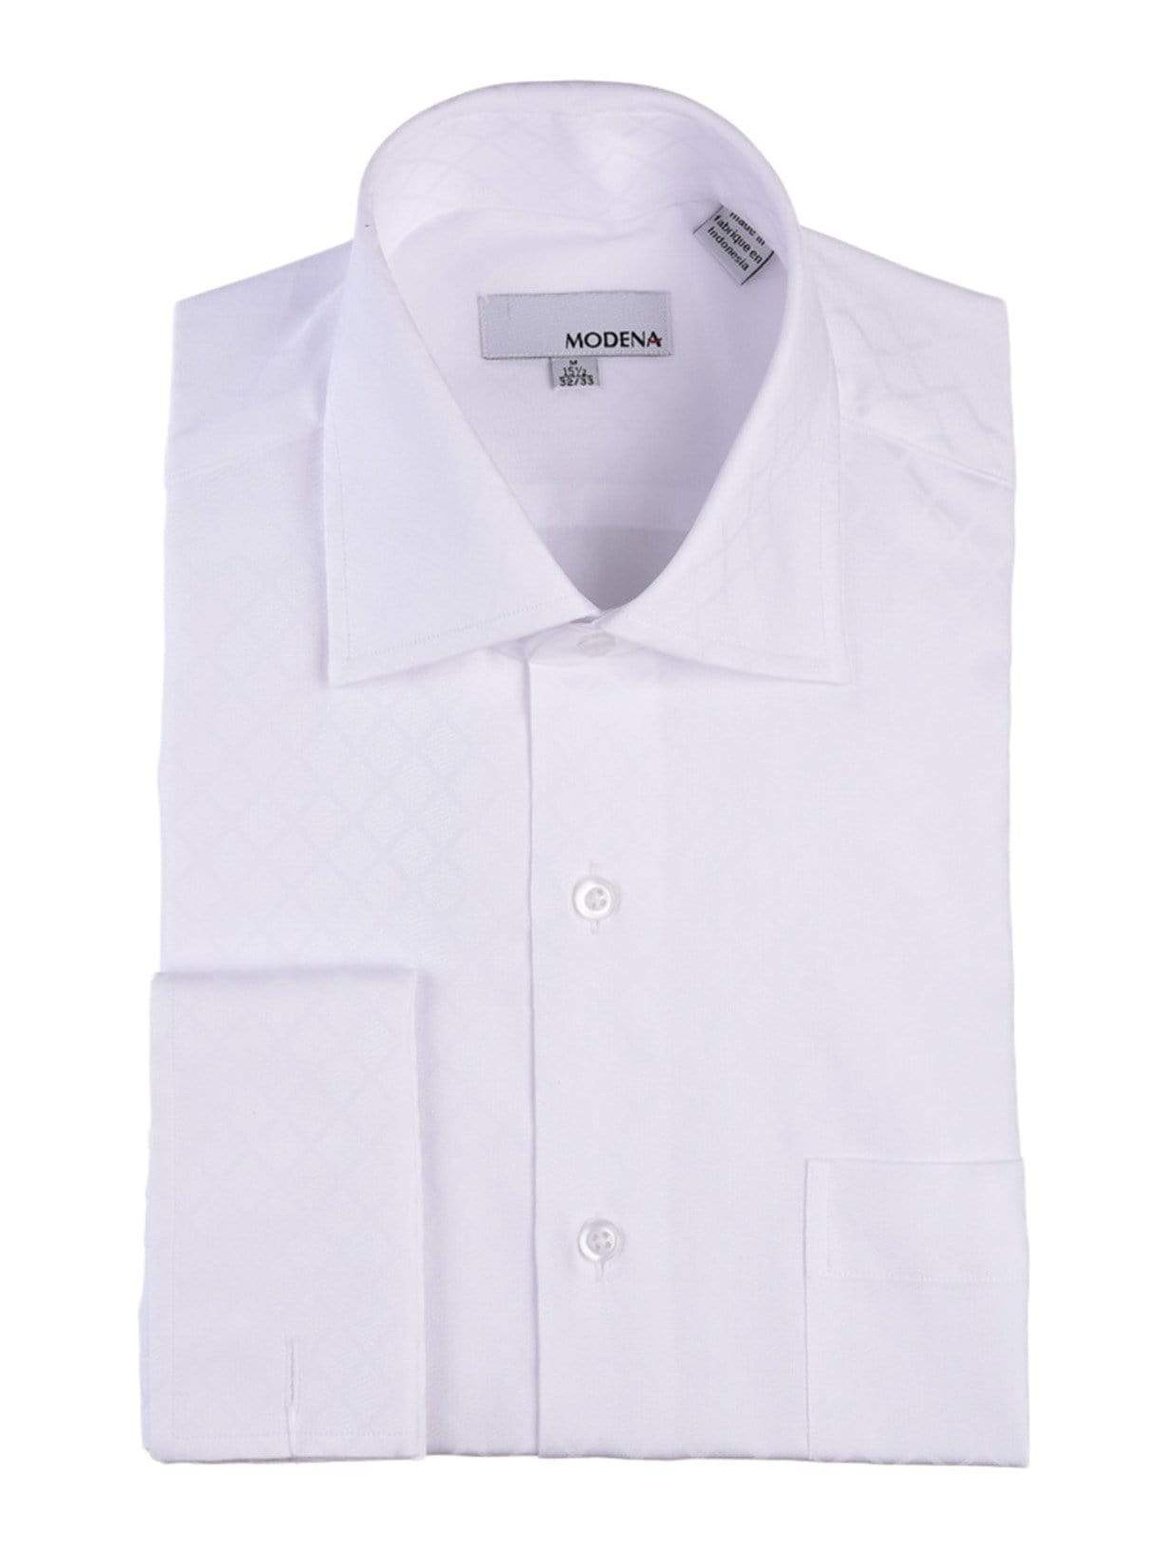 Modena Sale Shirts 14 1/2 32/33 Mens White Tonal Diamond Spread Collar French Cuff Cotton Blend Dress Shirt